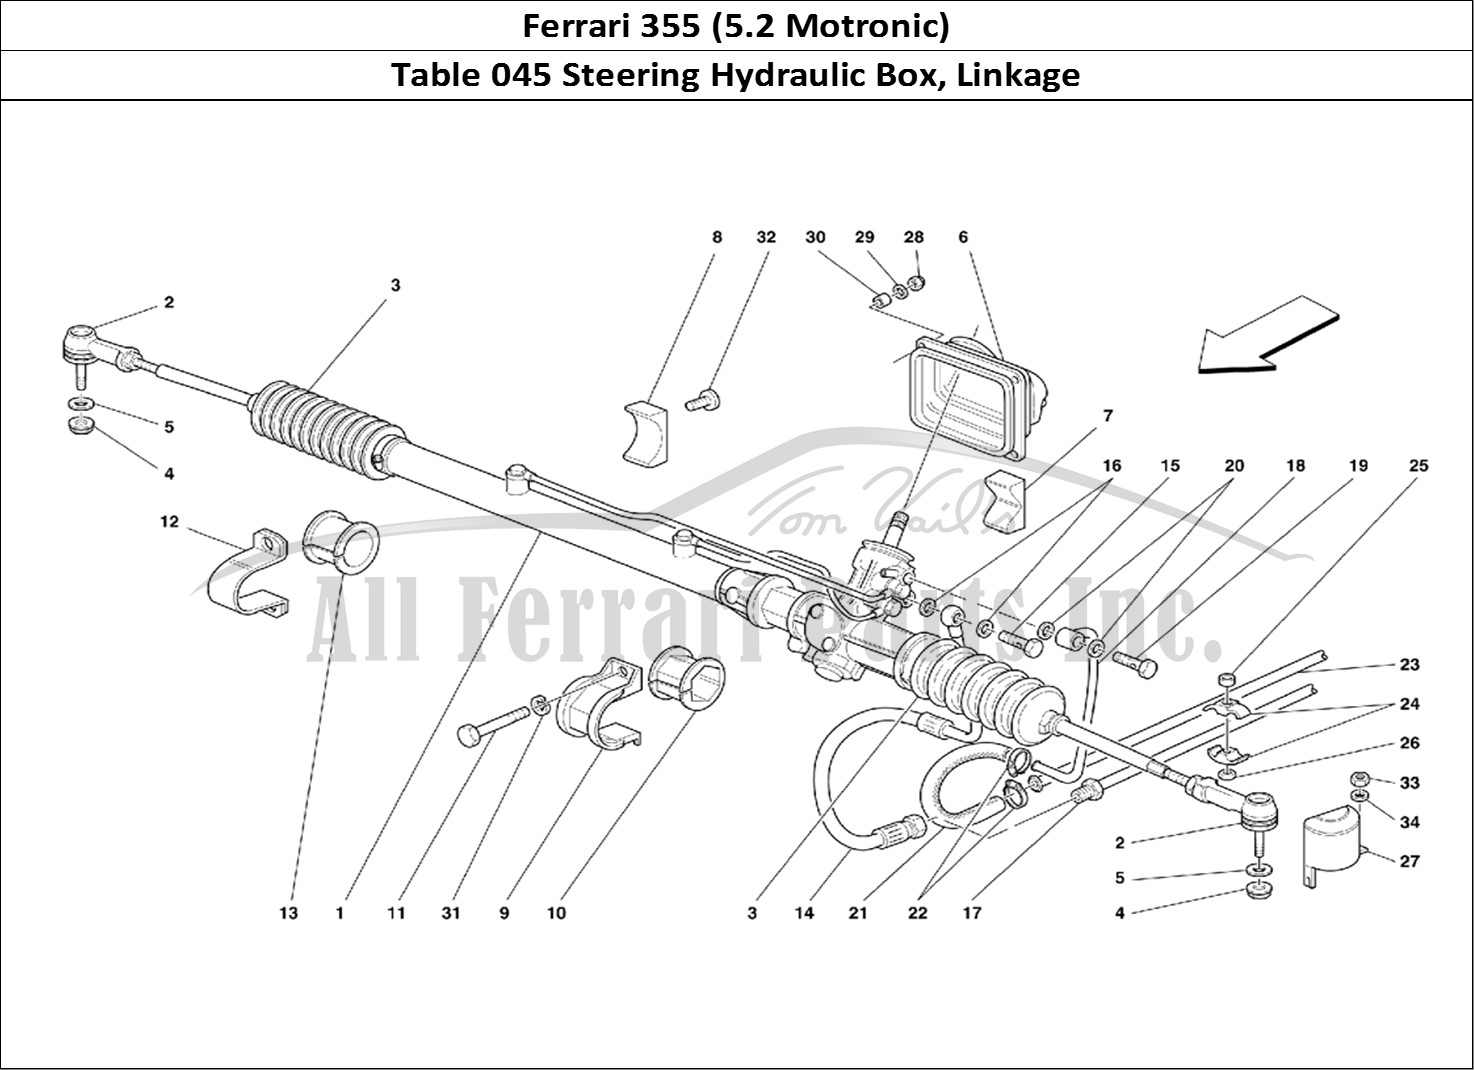 Ferrari Parts Ferrari 355 (5.2 Motronic) Page 045 Hydraulic Steering Box an